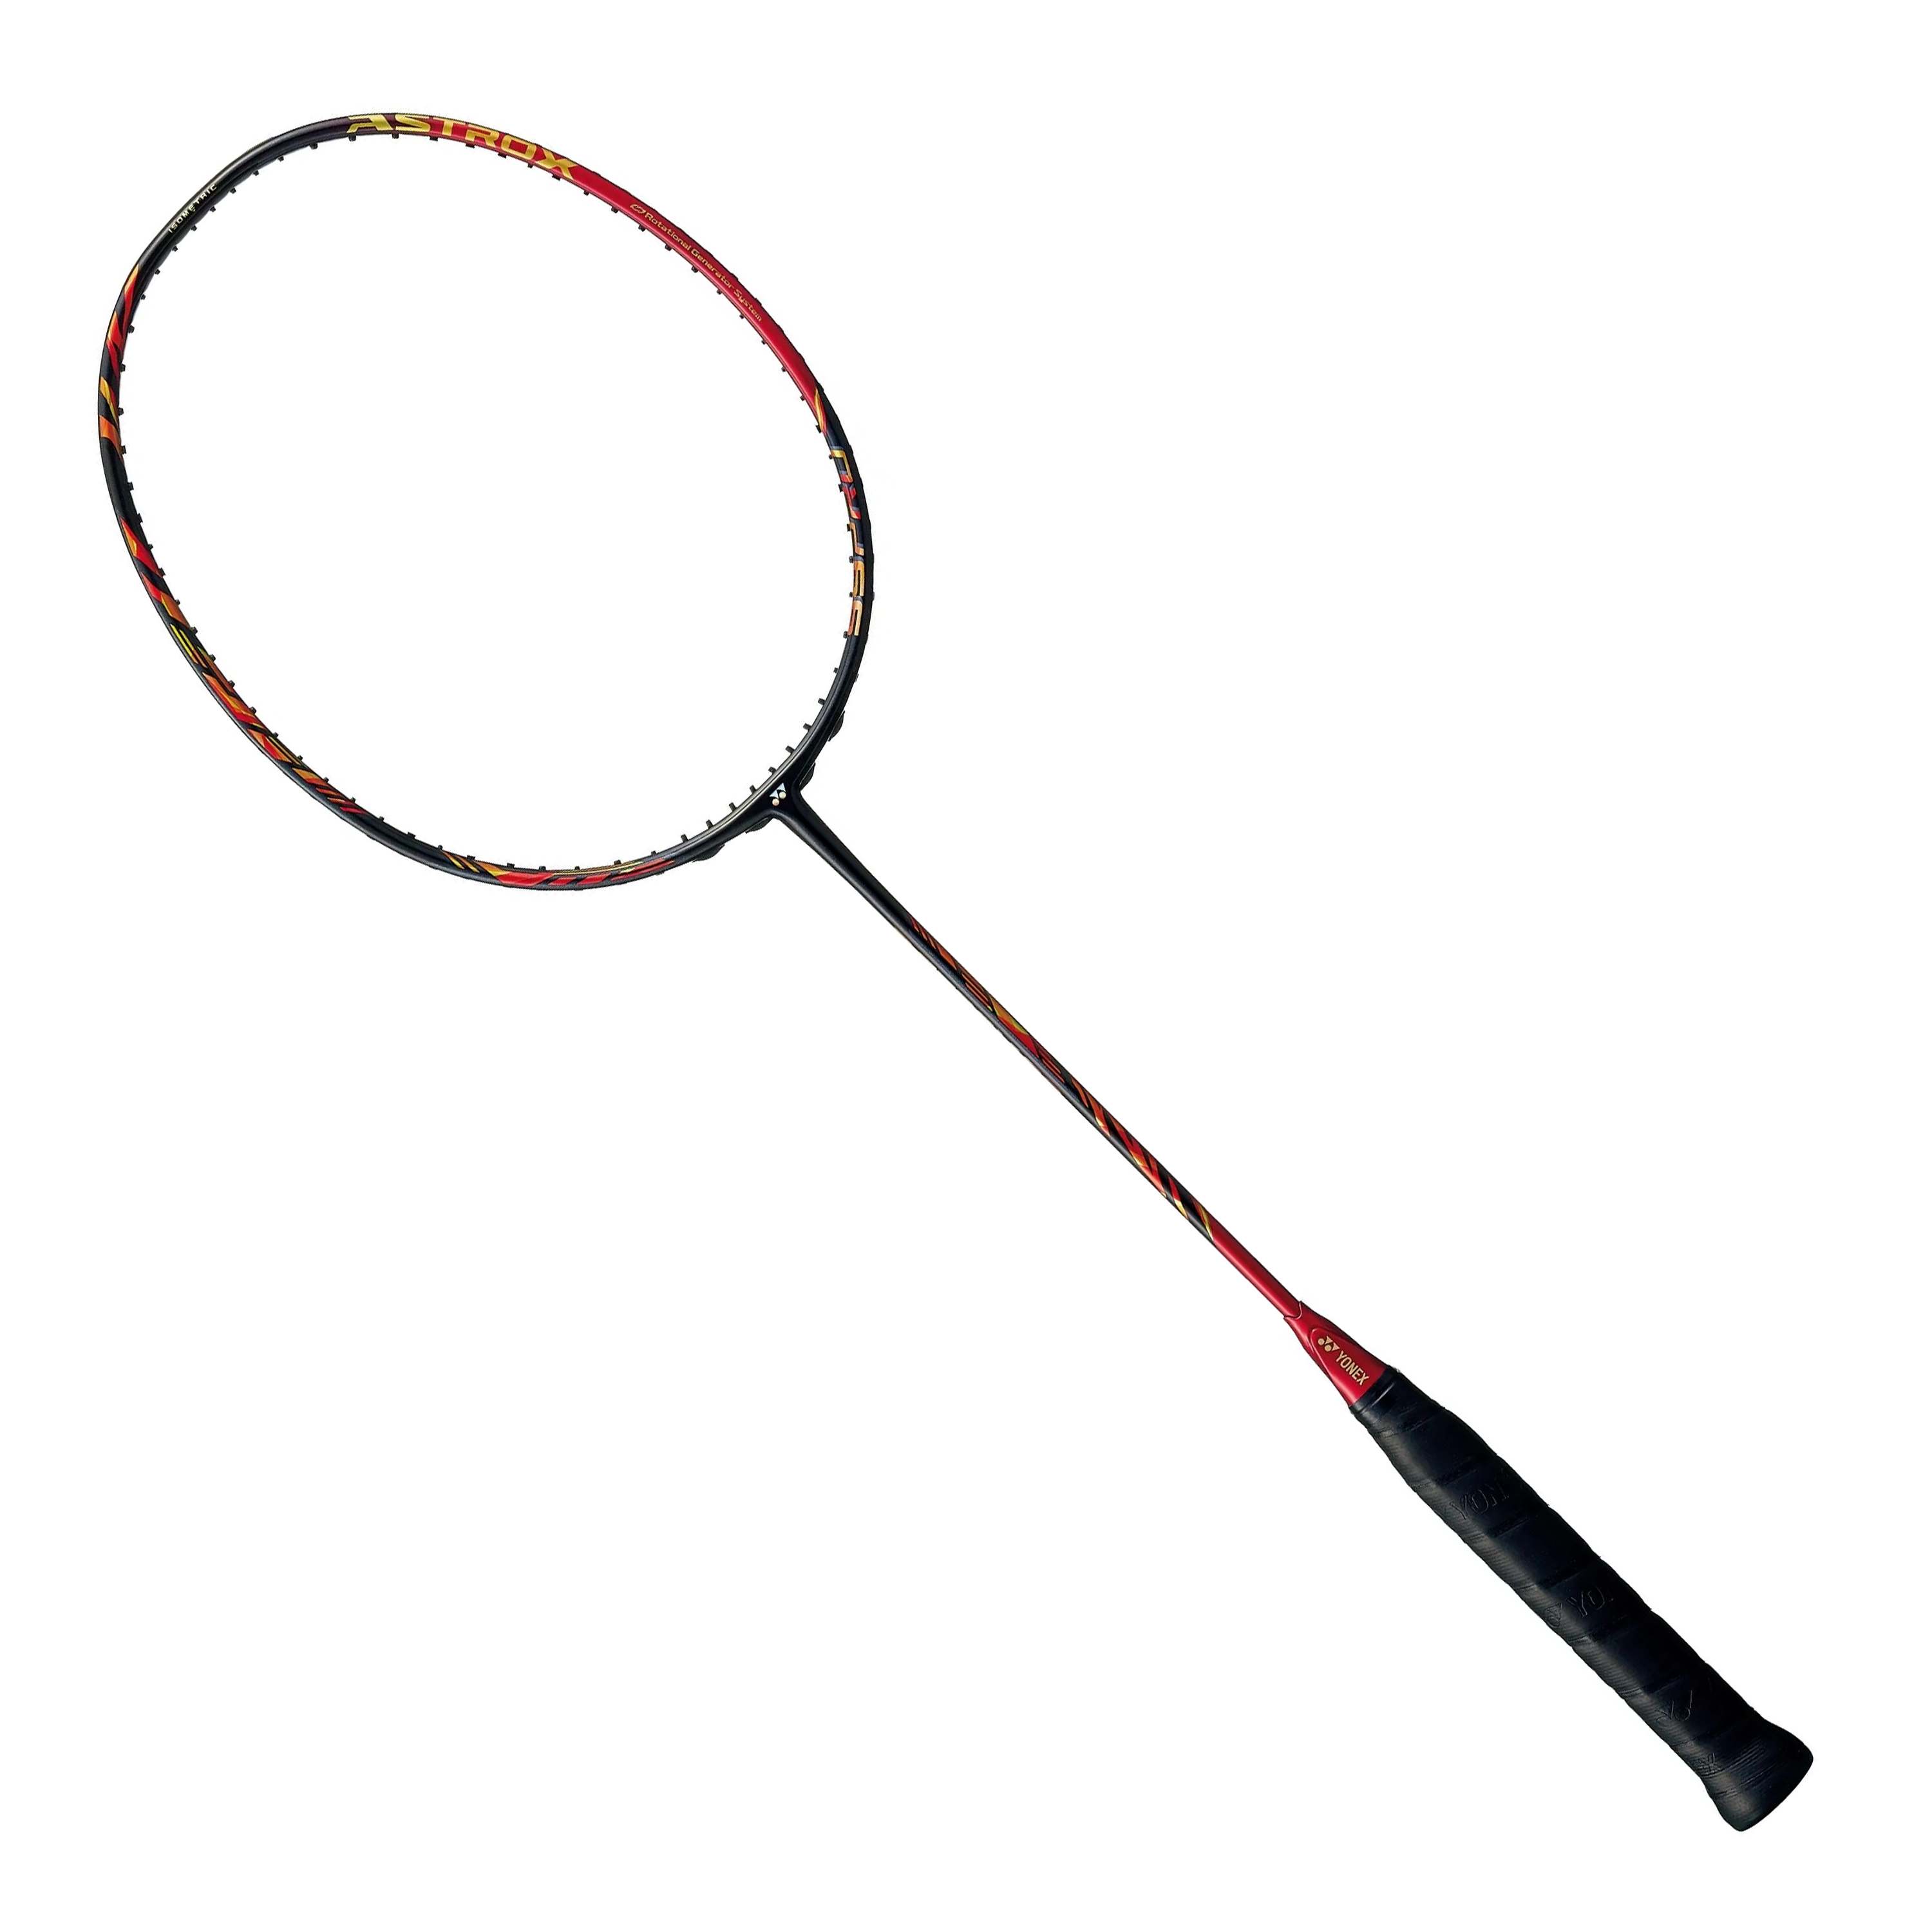 Yonex Astrox 99 Pro Badminton Racquet Cherry Sunburst 3U(88g)G5